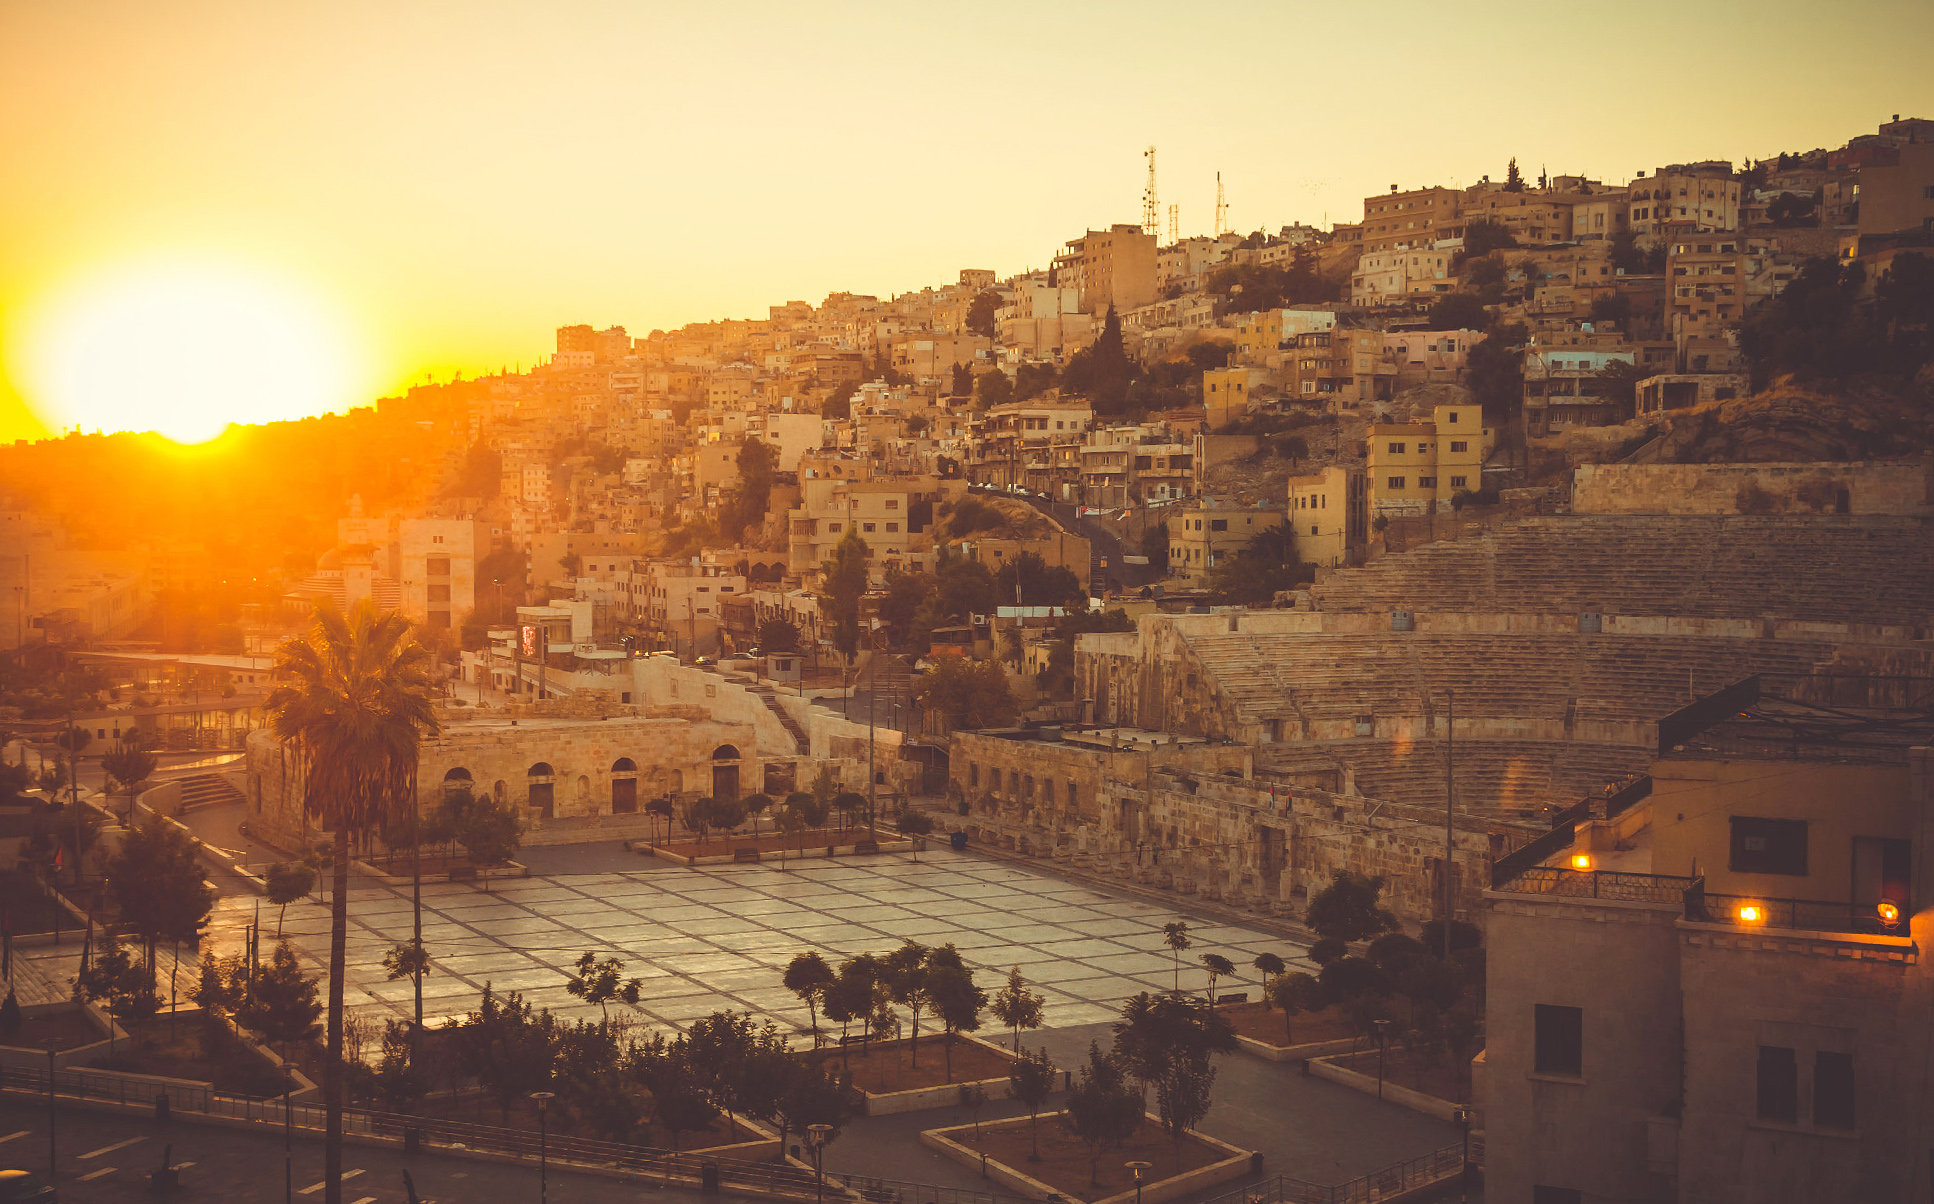 Sun rises over the city of Amman, Jordan